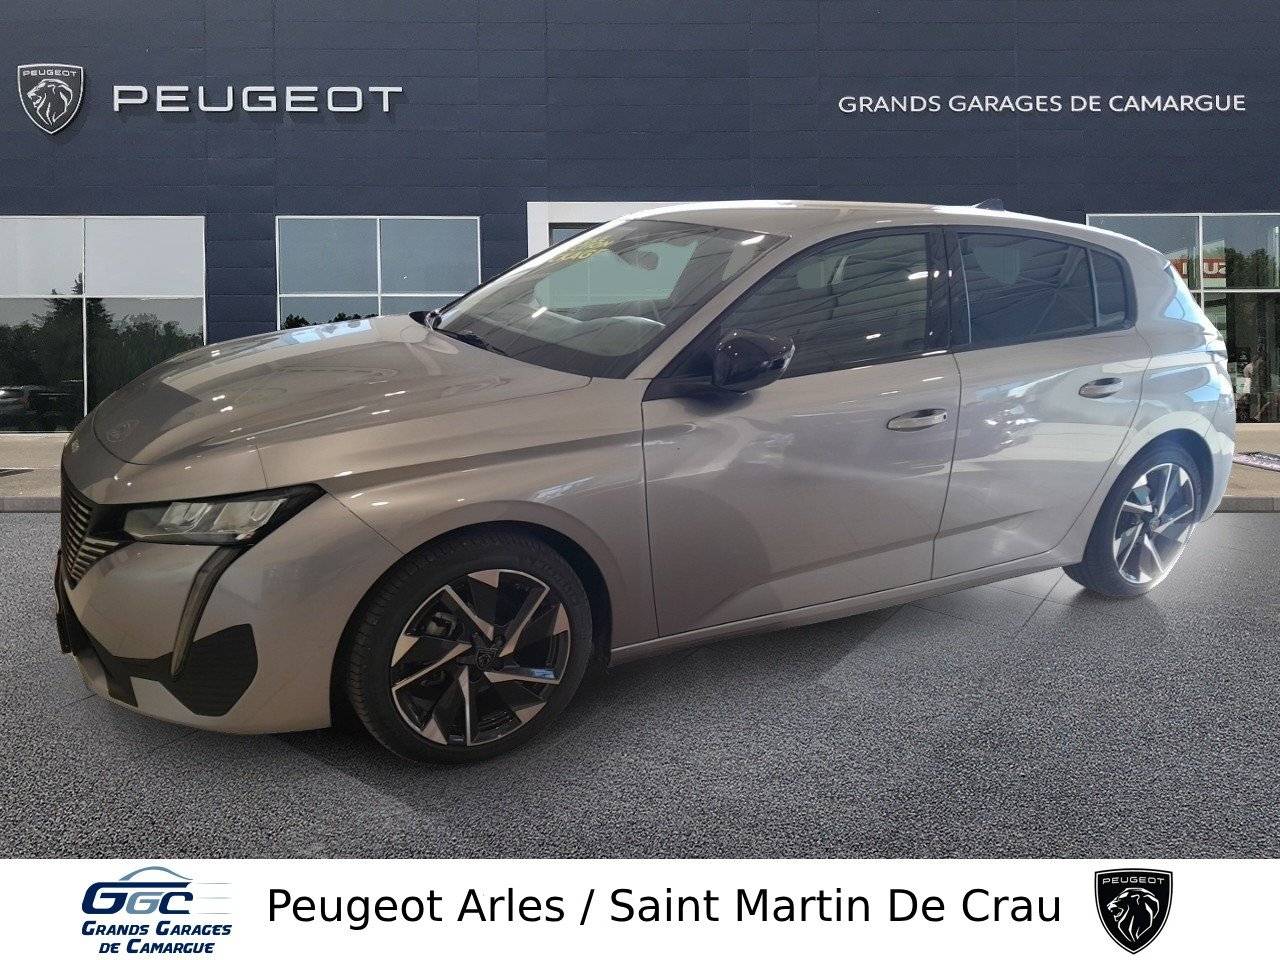 PEUGEOT 308 | 308 PureTech 130ch S&S EAT8 occasion - Suzuki Arles